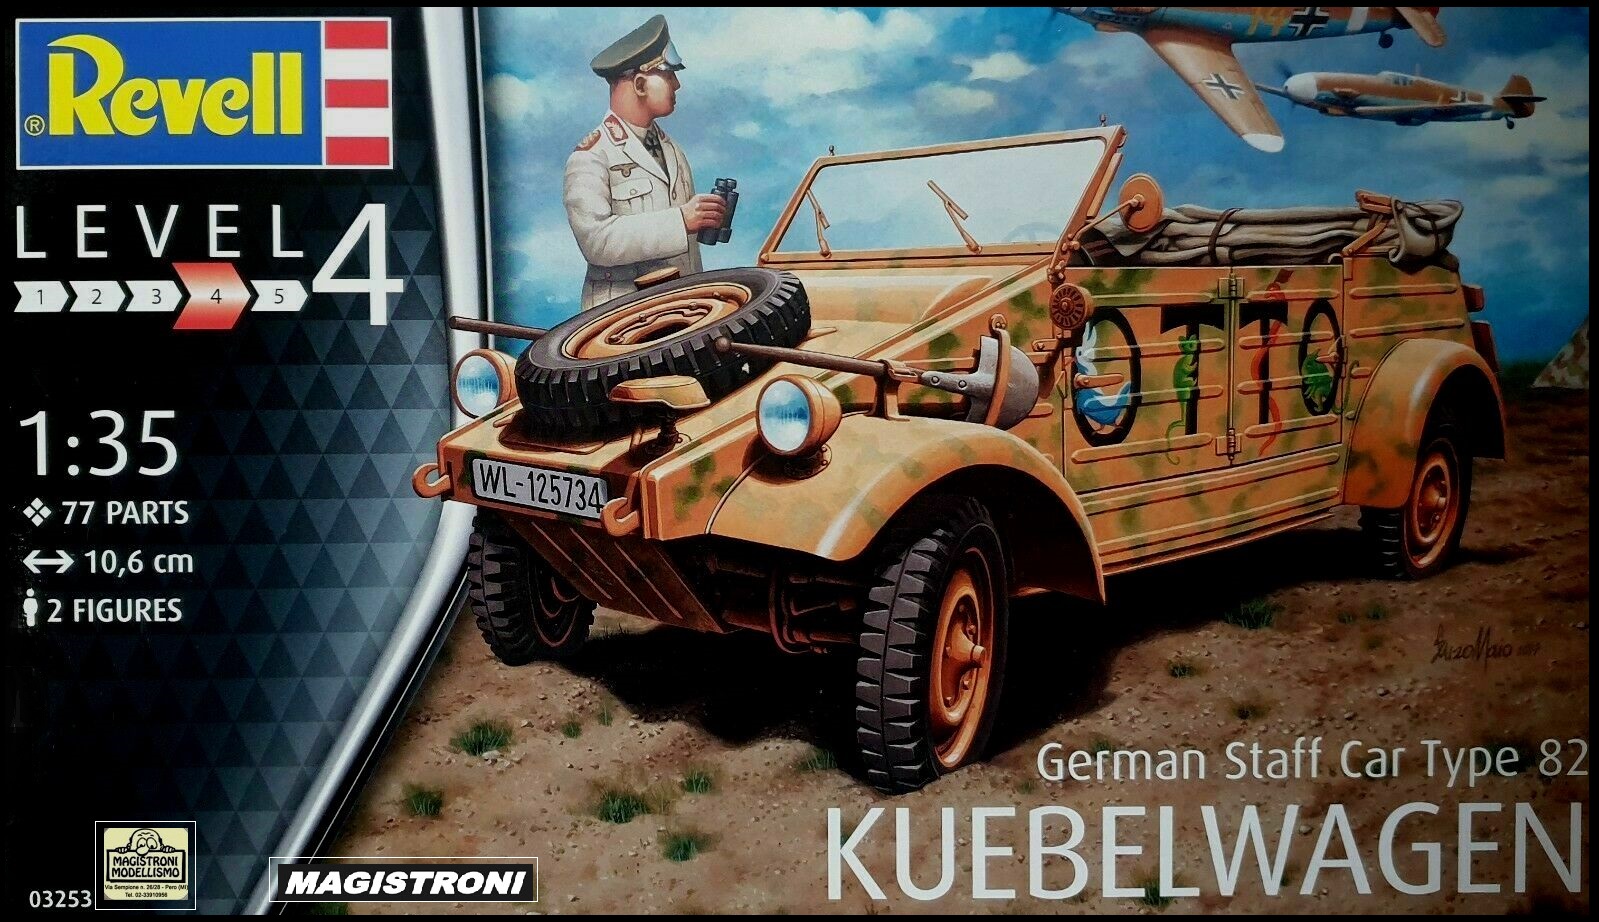 GERMAN STAFF CAR TYPE 82 KUBELWAGEN